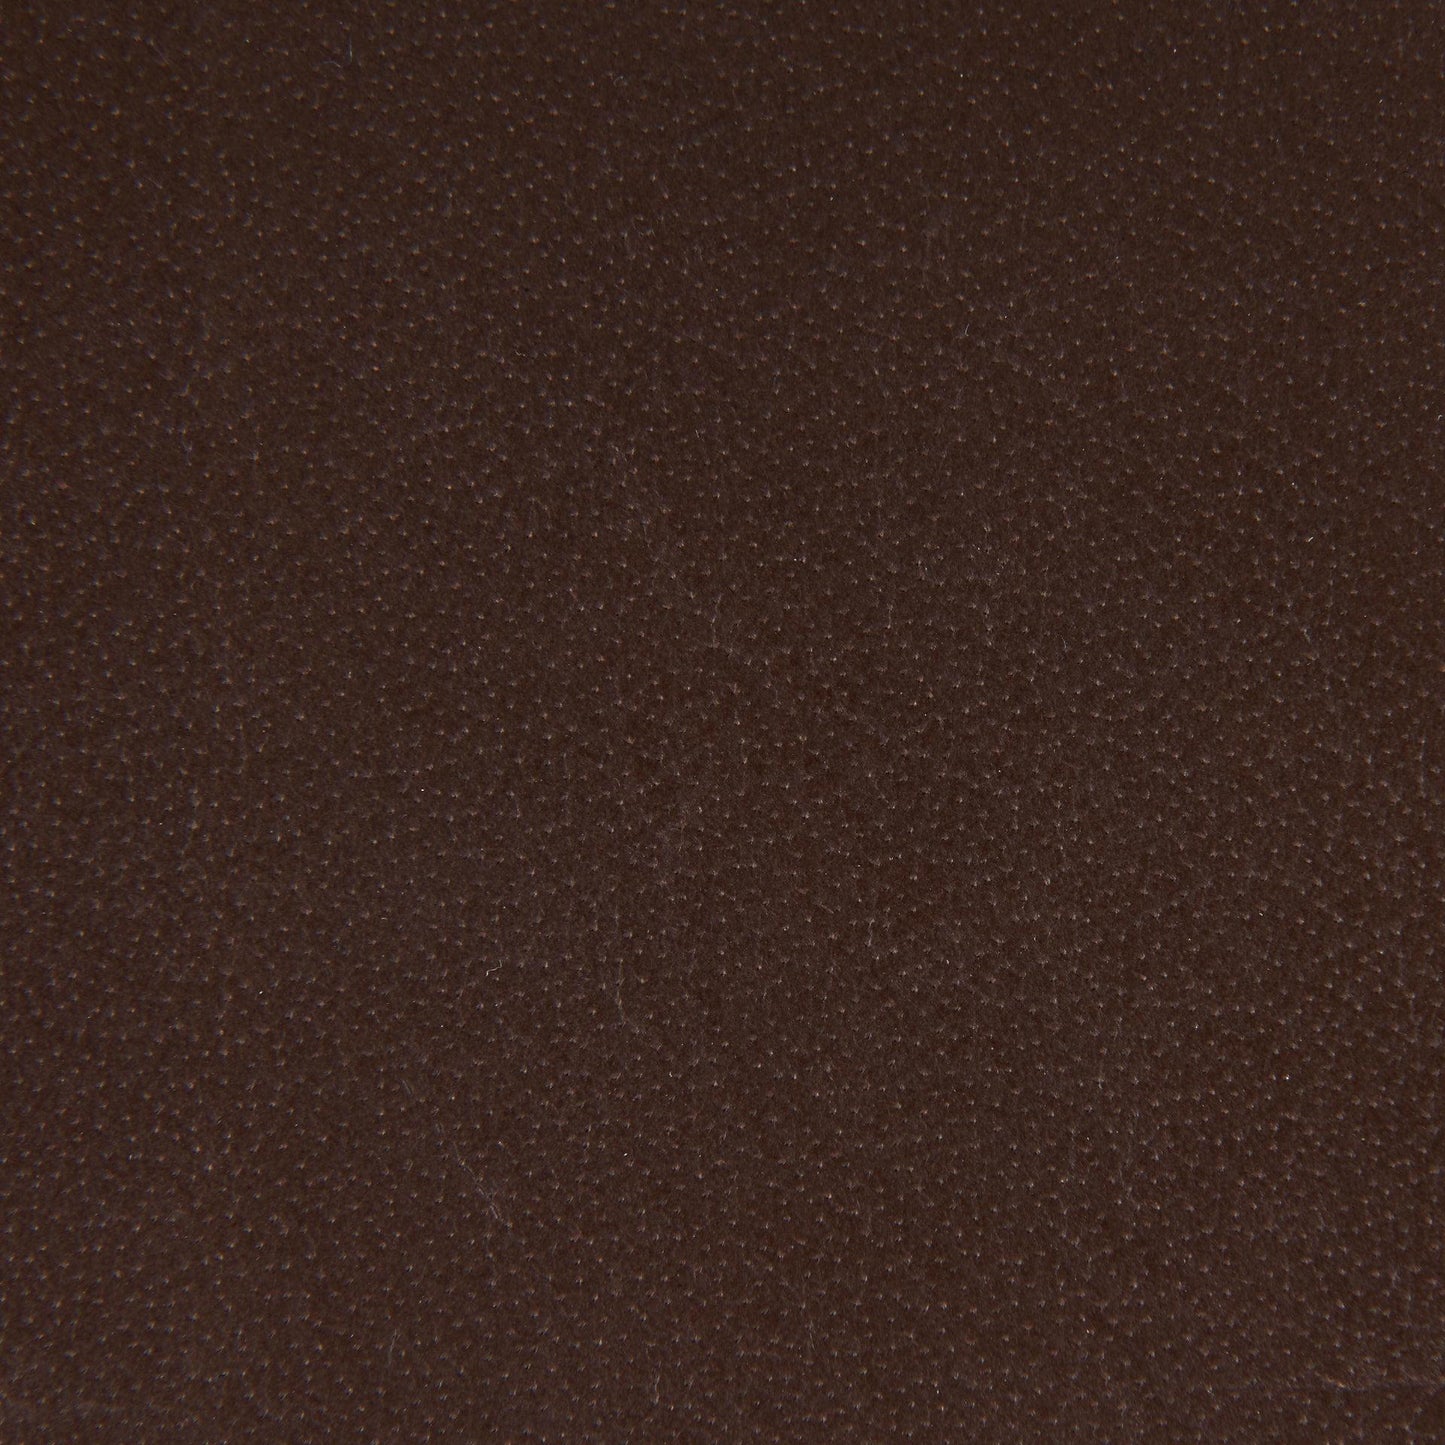 Clarissa 18.0L x 16.0W x 26.25H Dark Brown Woven Leather Seat W/ Black Iron Frame Counter Stool